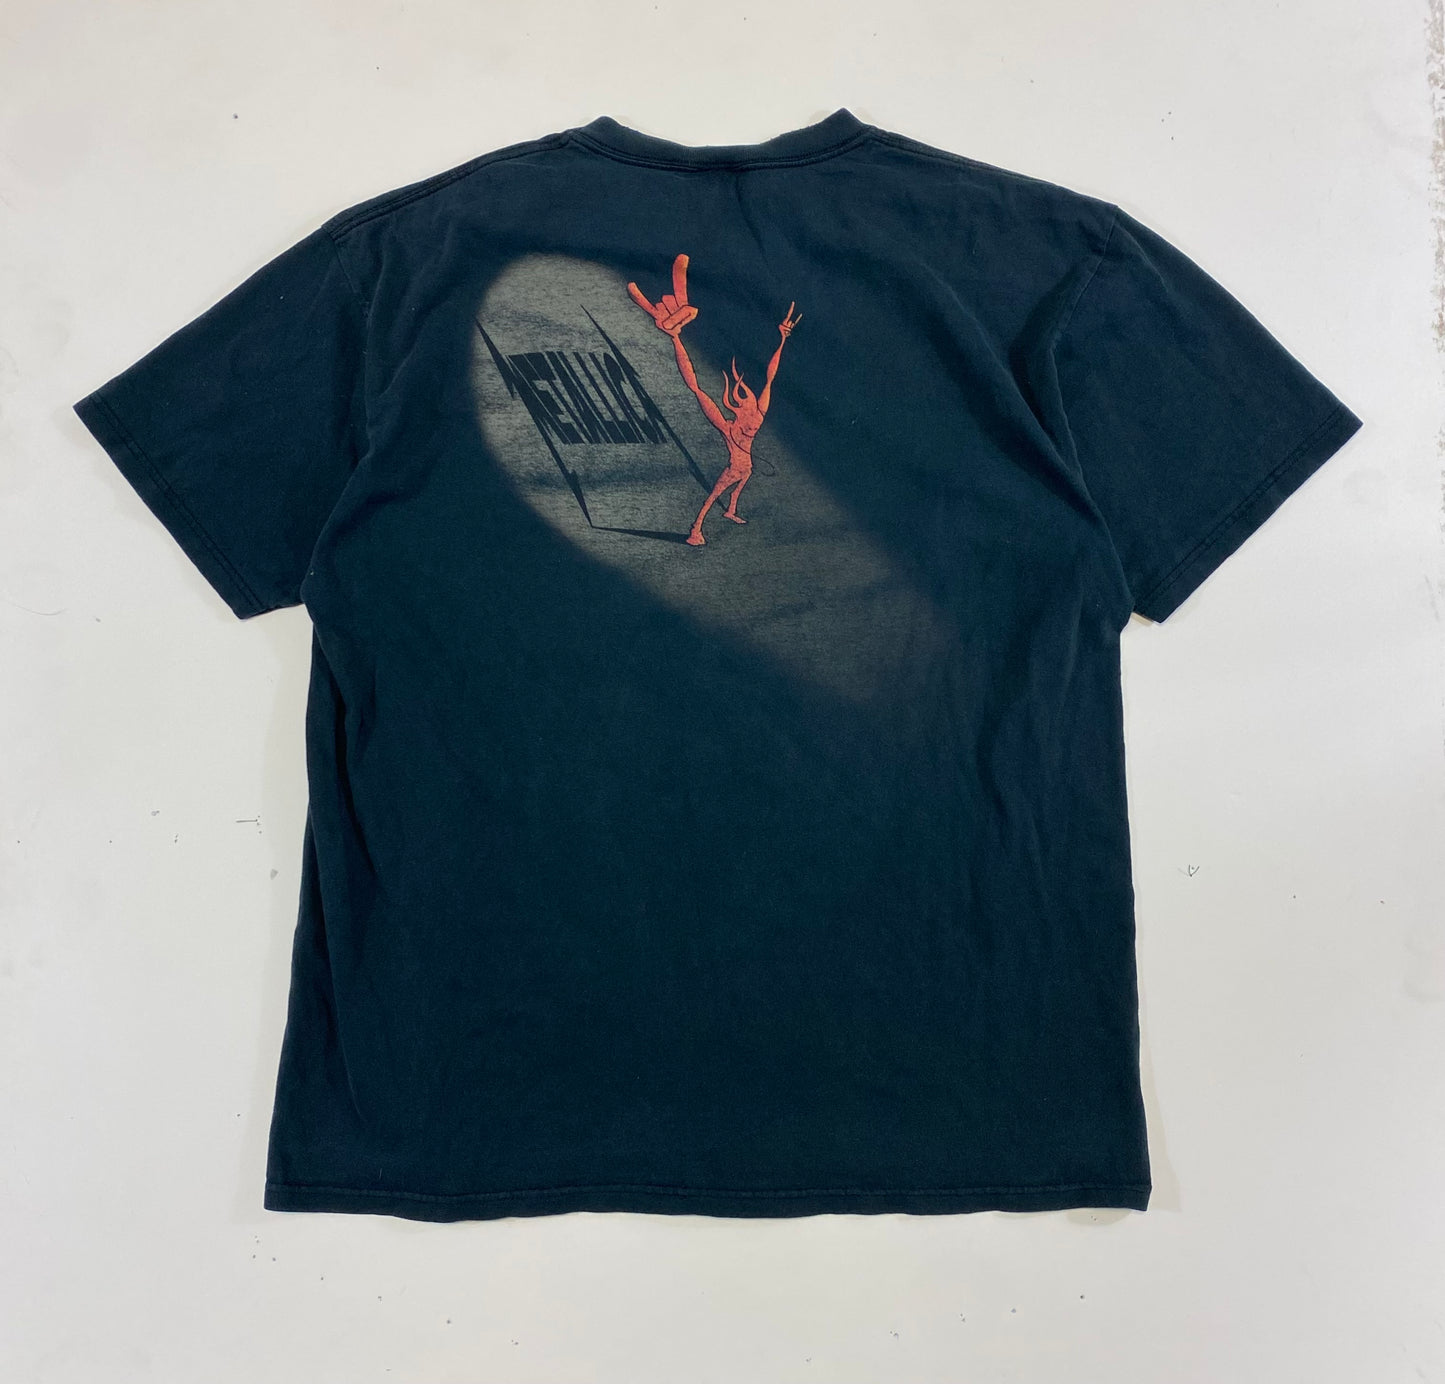 2000’s Metallica Kill ‘em All Band T-Shirt Size XL